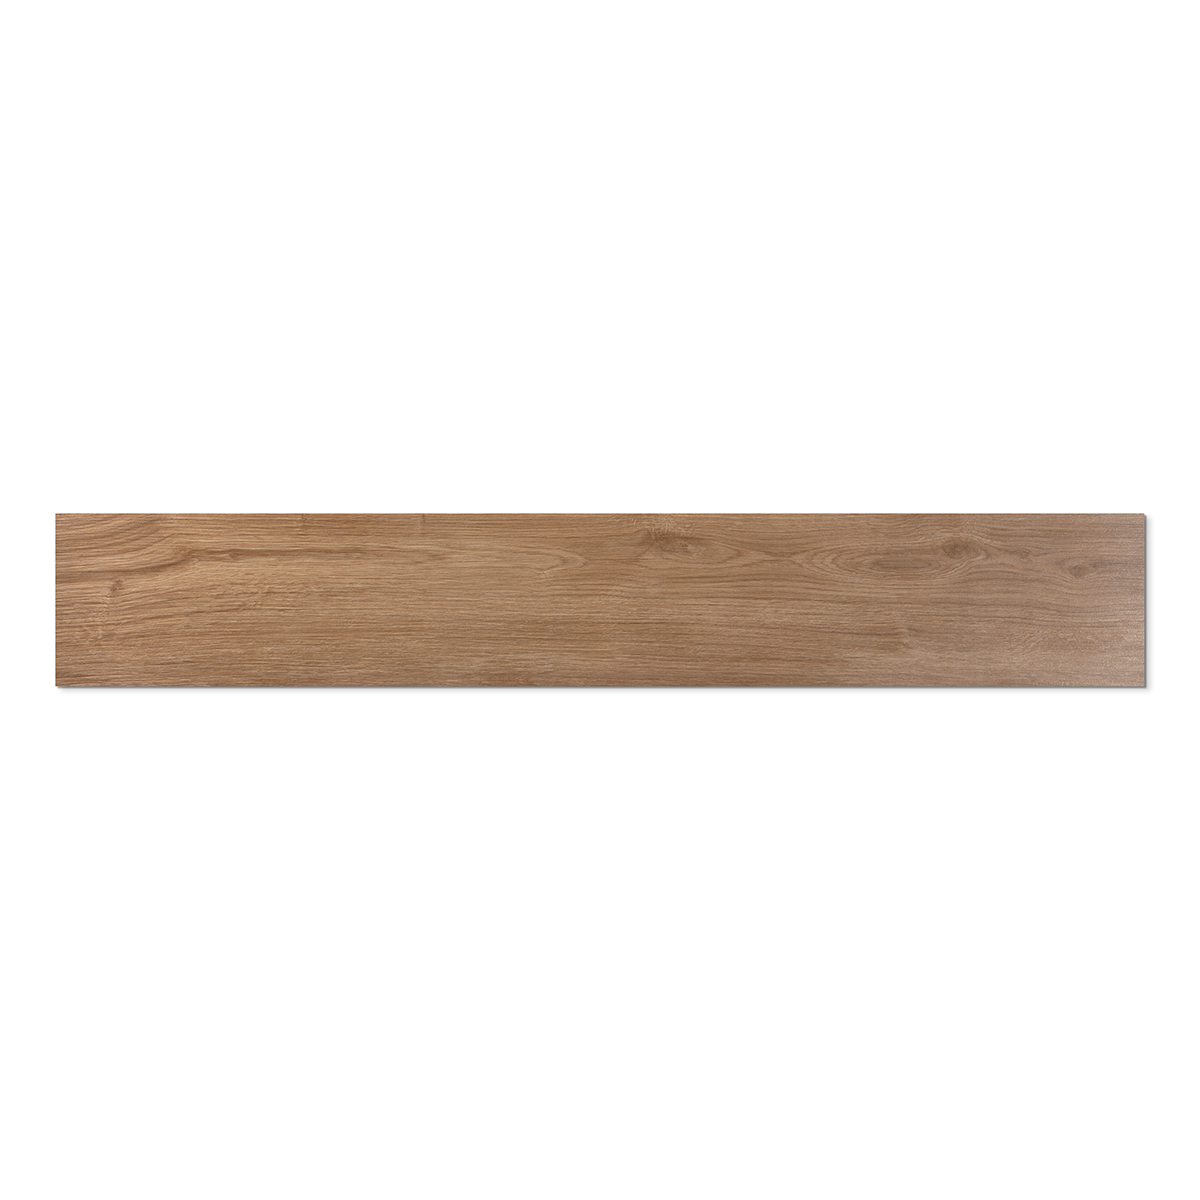 Lumber Oak 8x48 Porcelain Tile 01